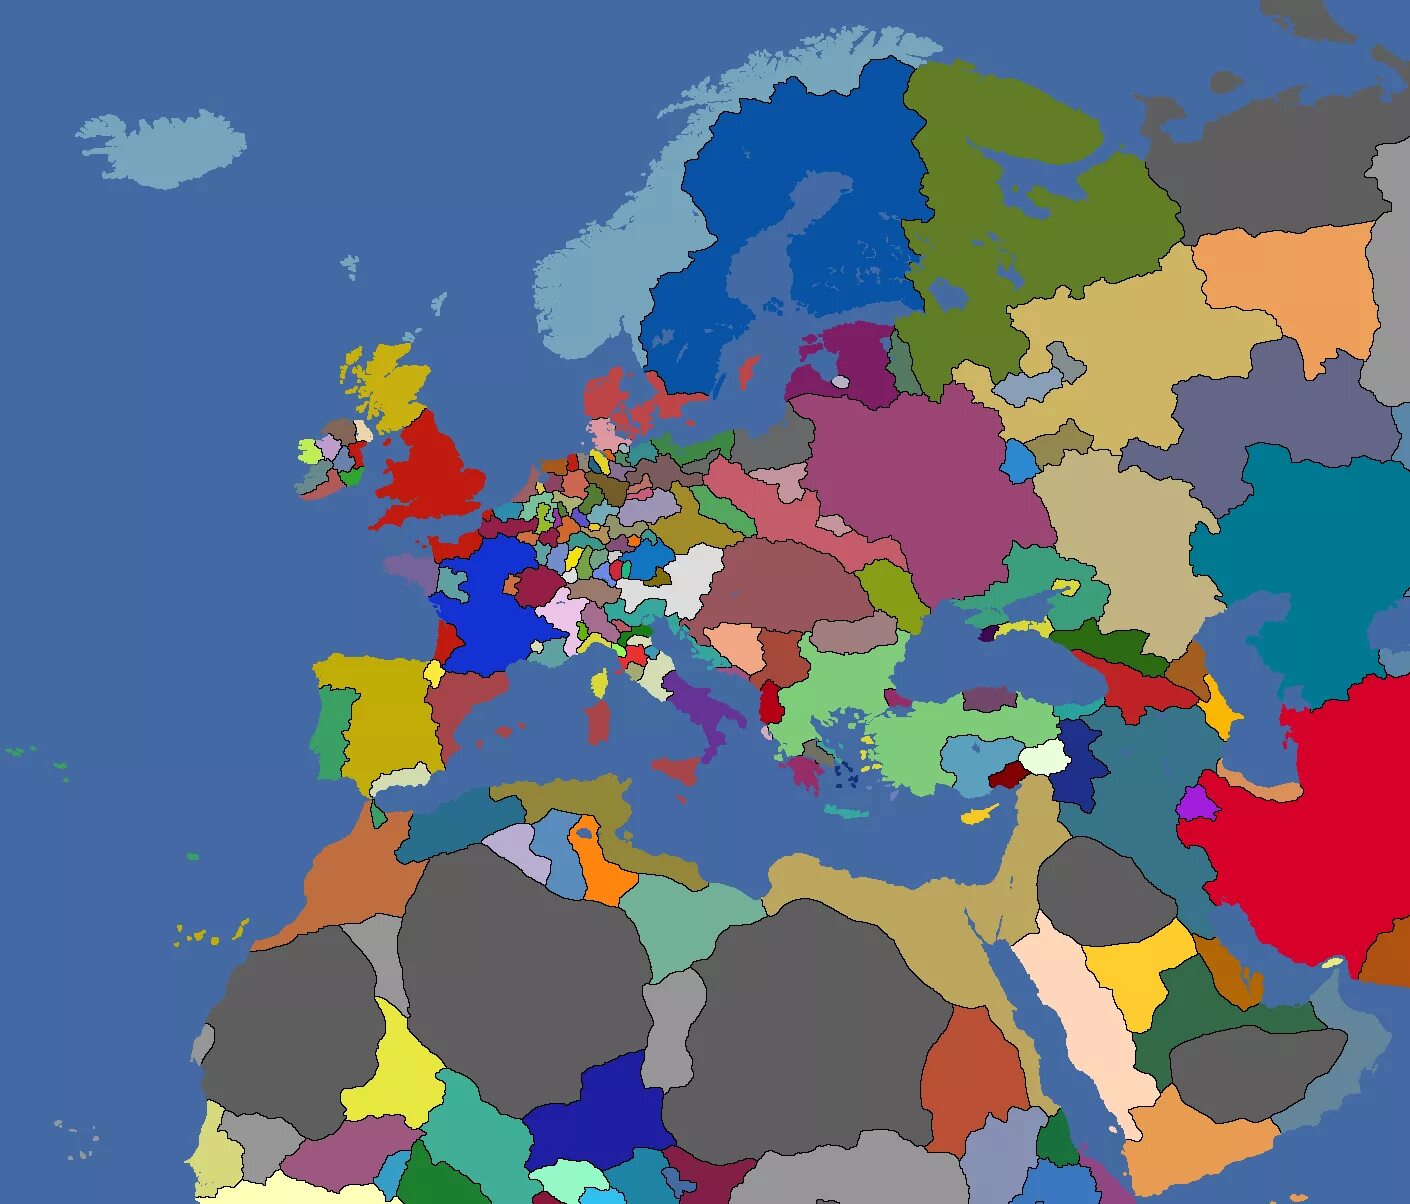 Maps for mapping. Eu4 Province Map Europe. Eu4 1444 Map. Map Europe 1444. Карта eu4 1444.